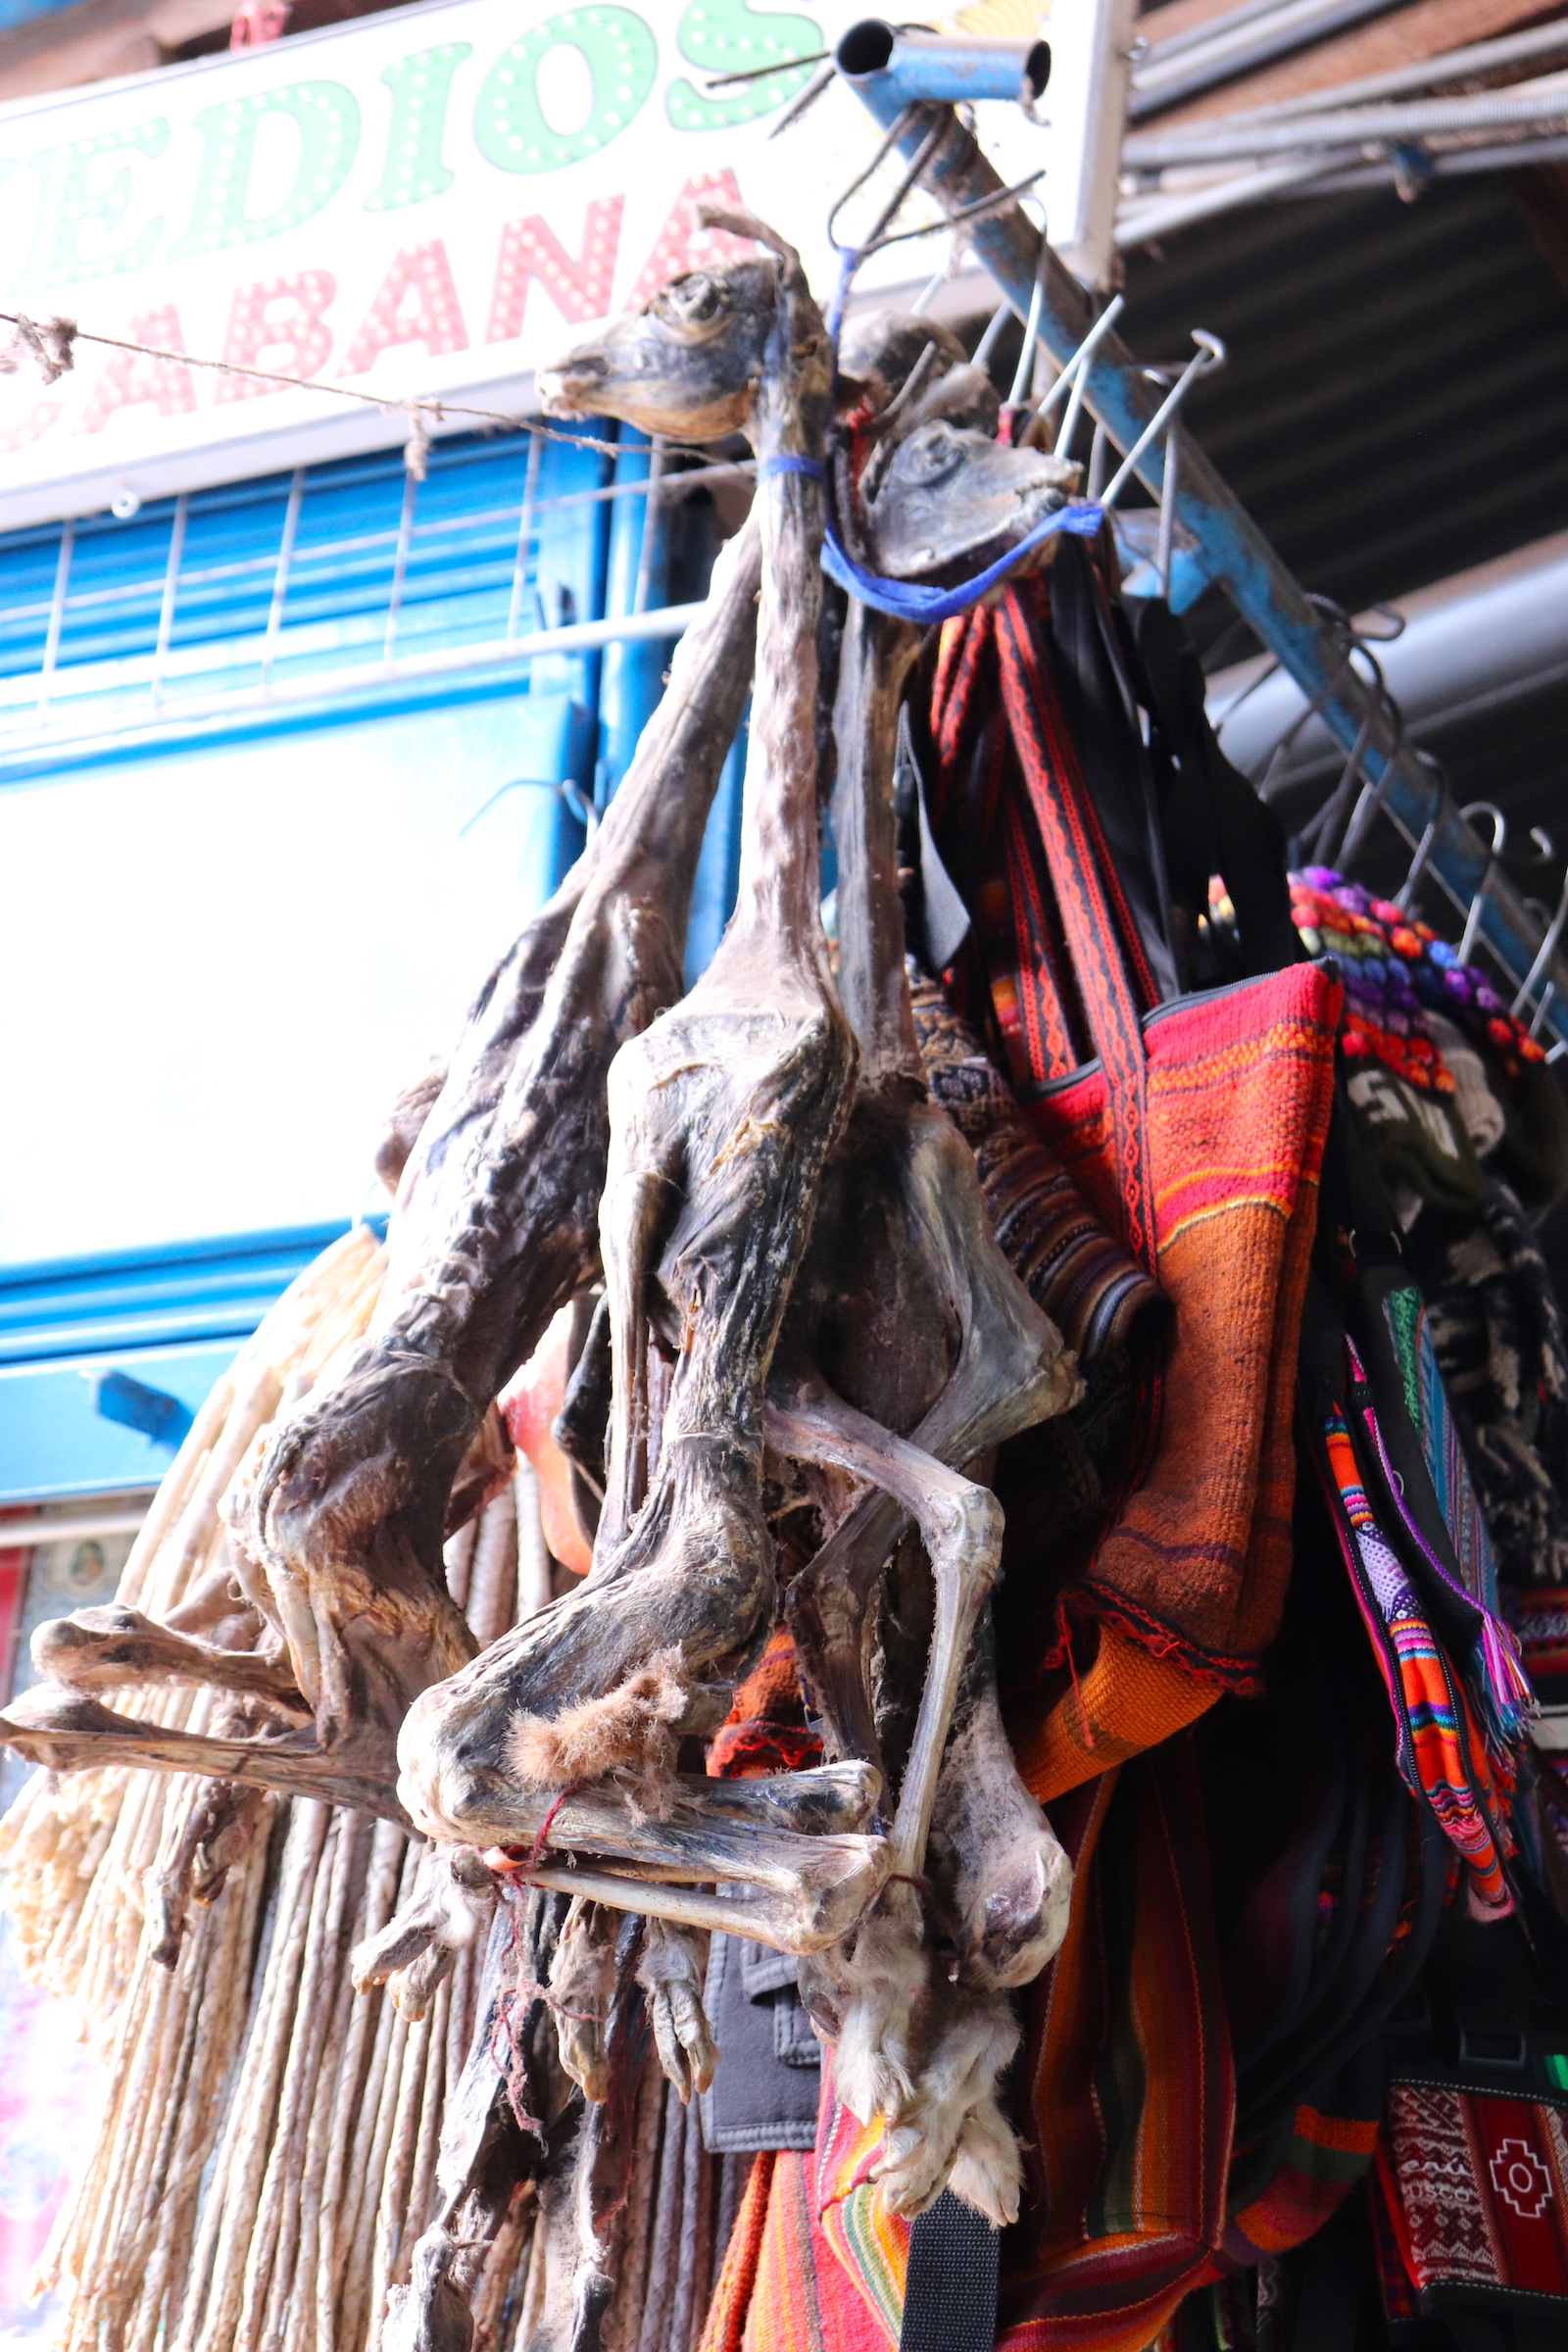 Lamas used for sacrifices, local market, Cusco